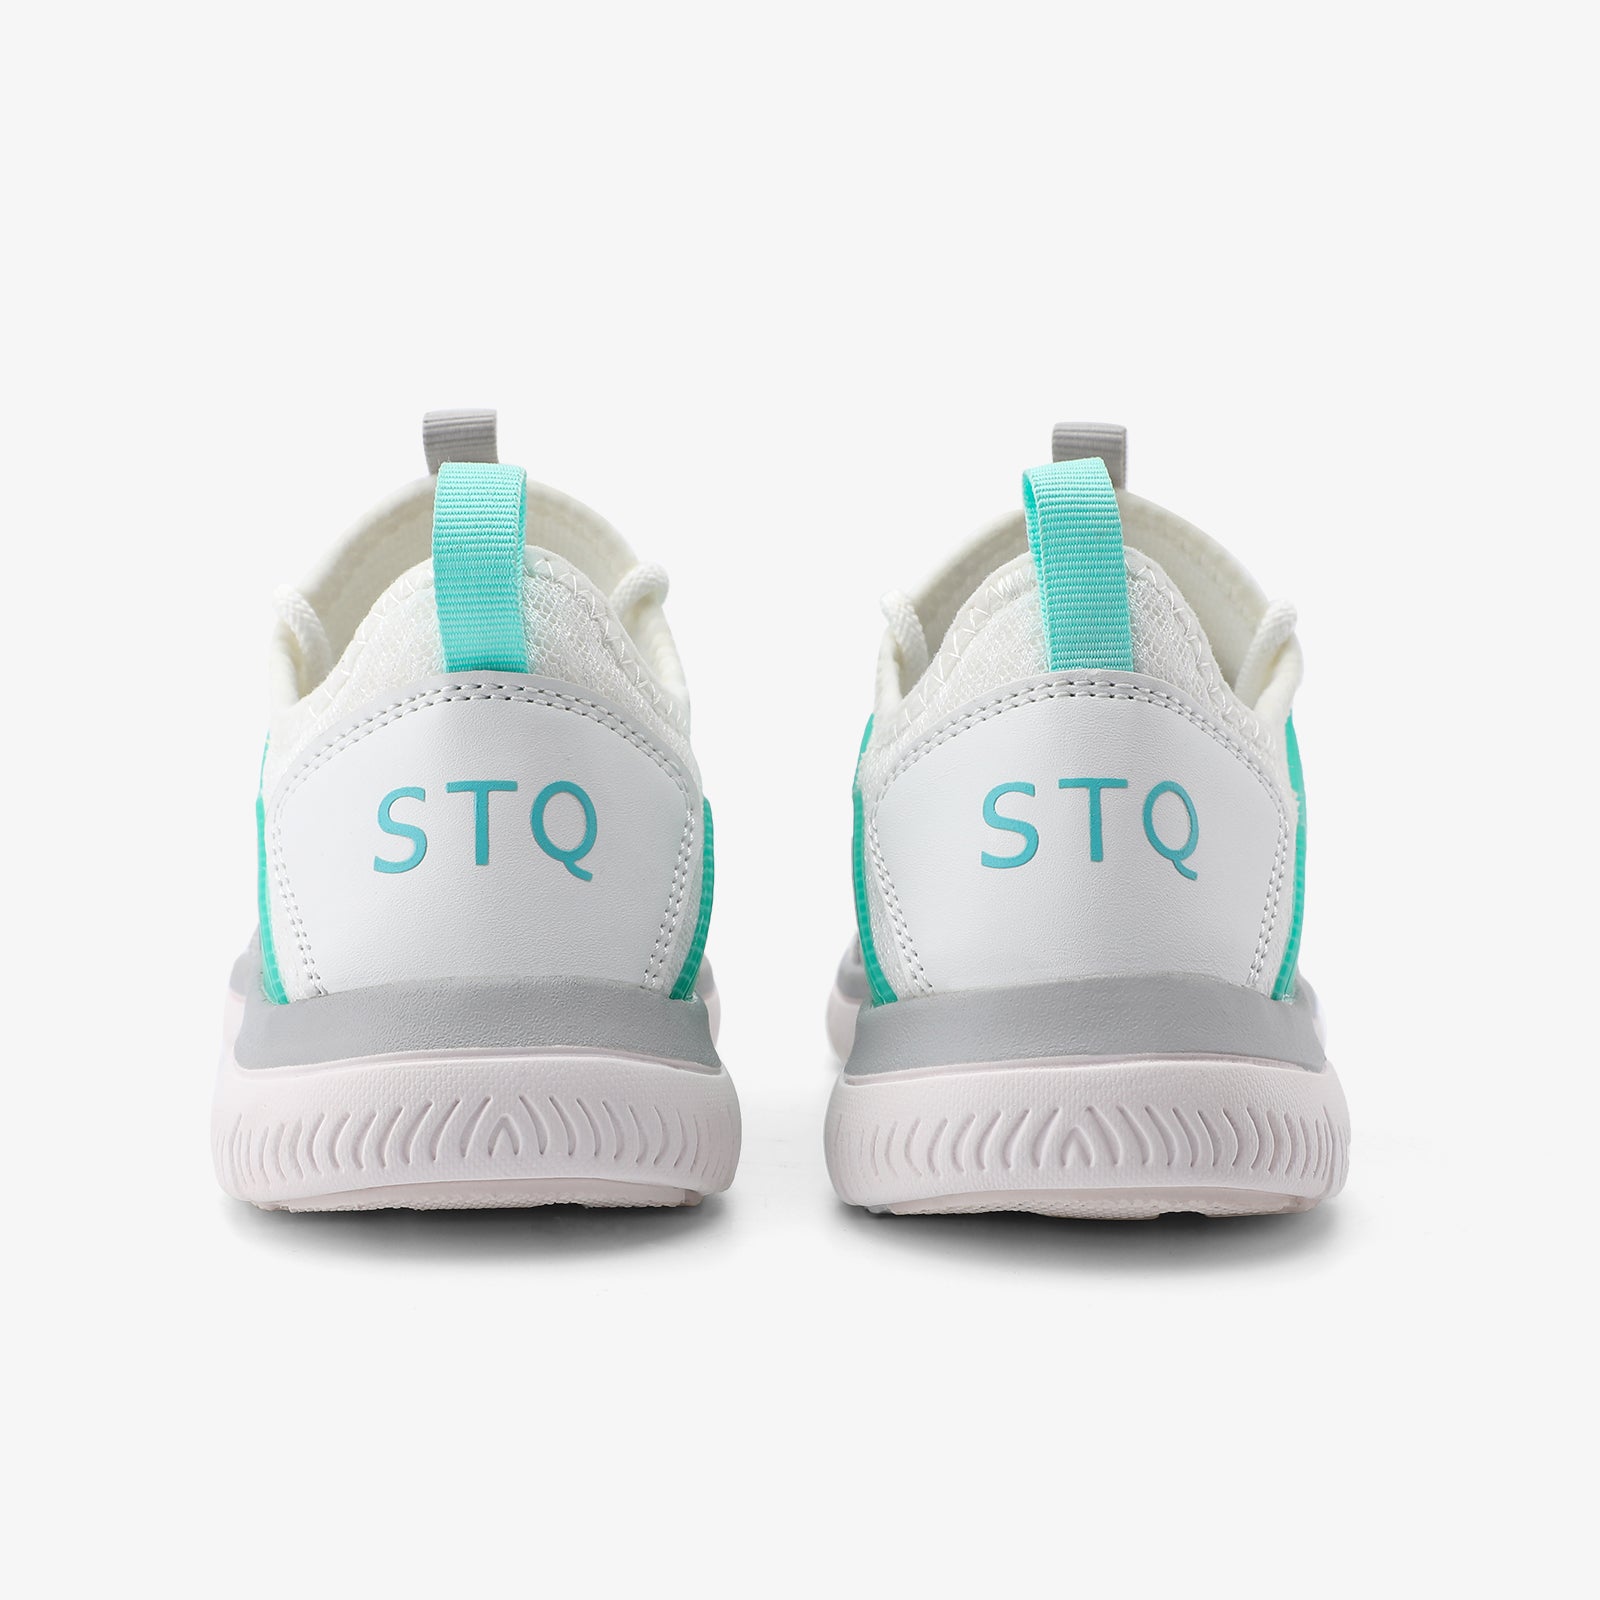 stq-fashion-sneakers-running-shoes-view